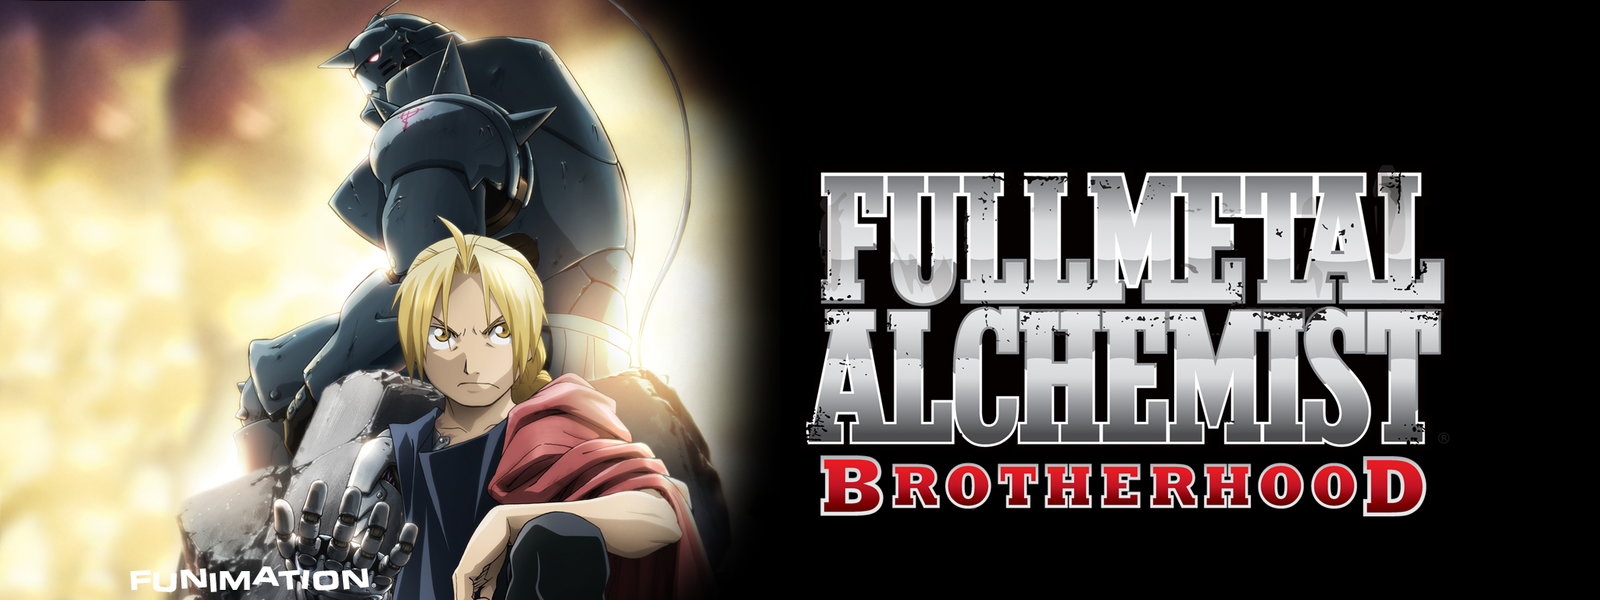 Review: Fullmetal Alchemist: Brotherhood – Under the Fridge